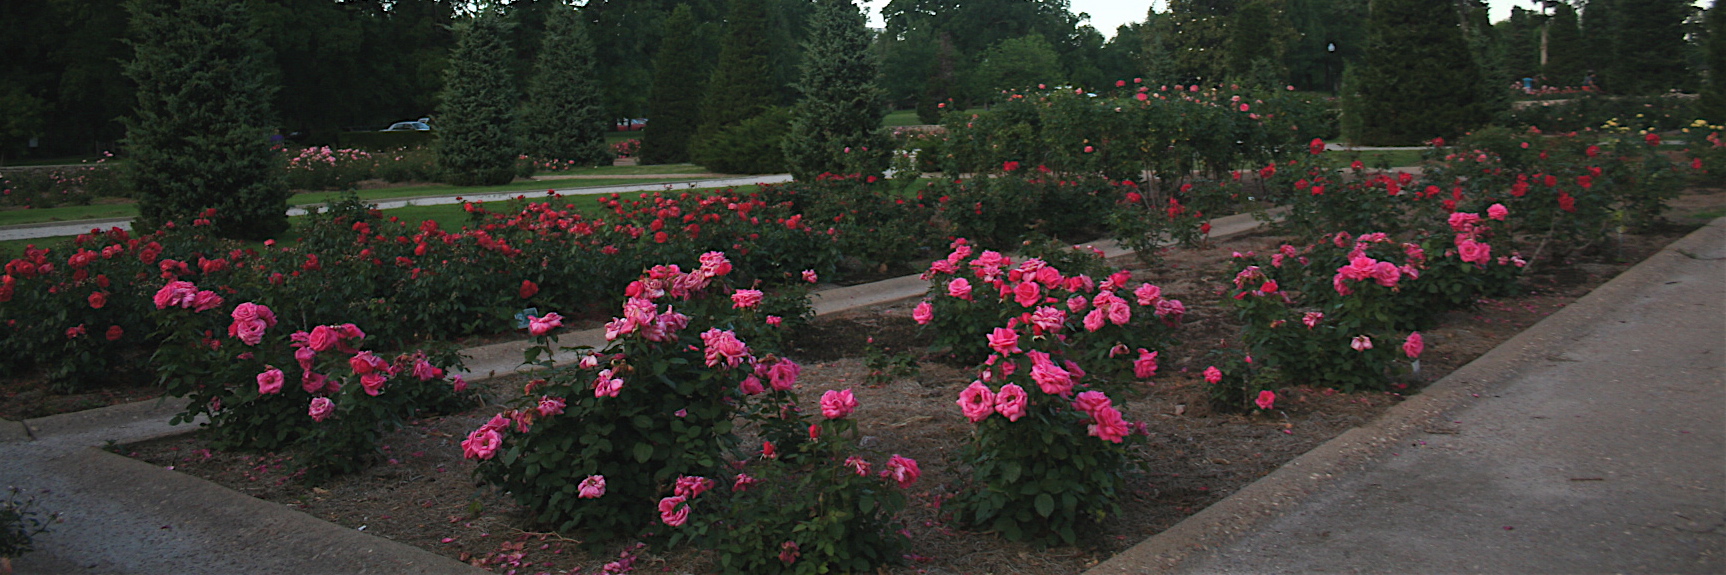 Tulsa Municipal Rose Garden at the Tulsa Garden Center in Woodward Park